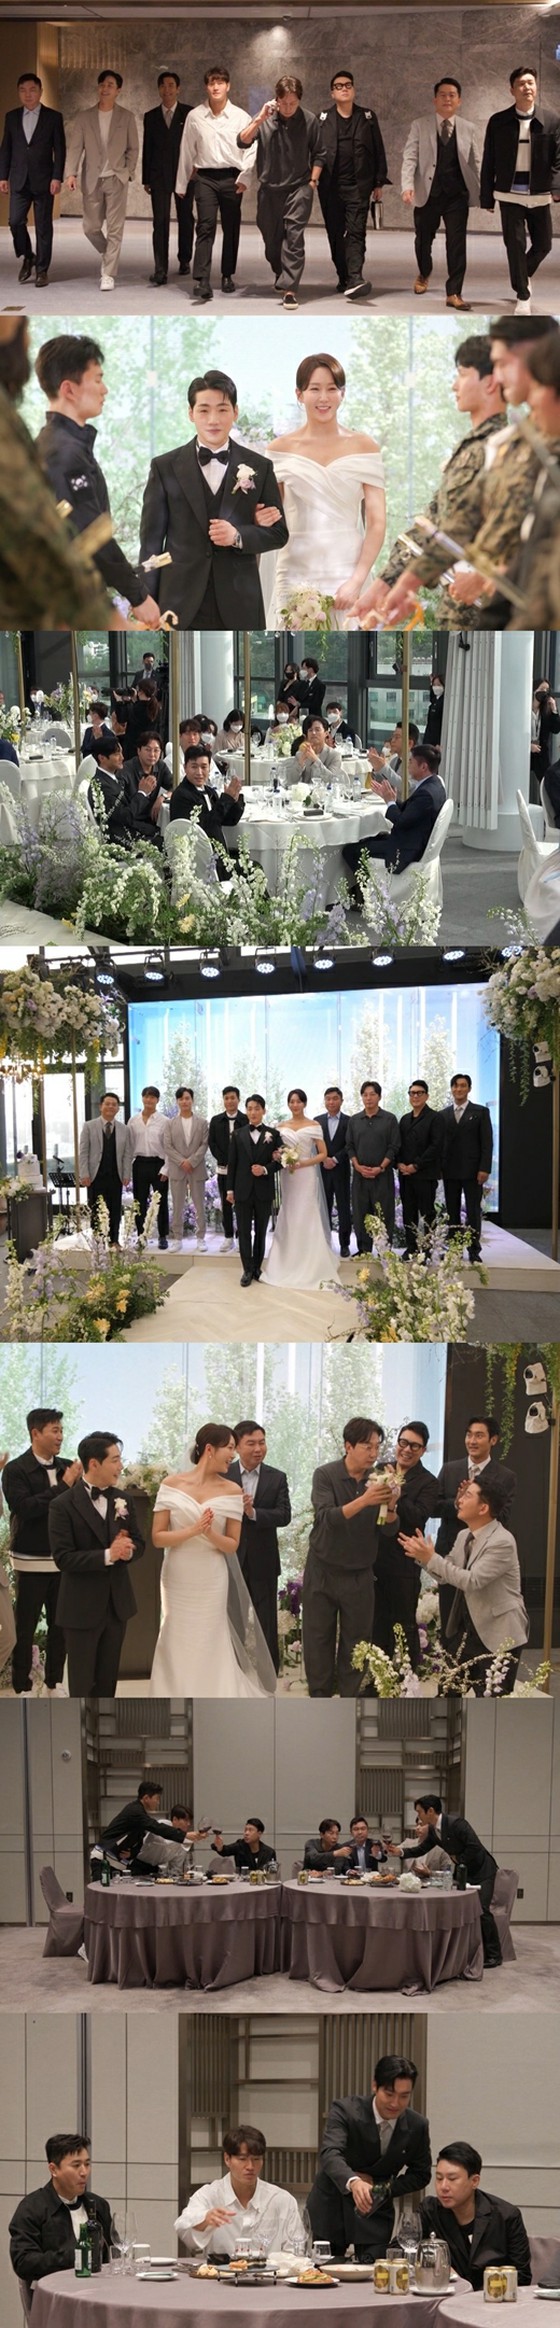 Park Gun & Han Young Kim JUNHO ที่ได้รับช่อดอกไม้ในงานแต่งงานใช่ไหม?